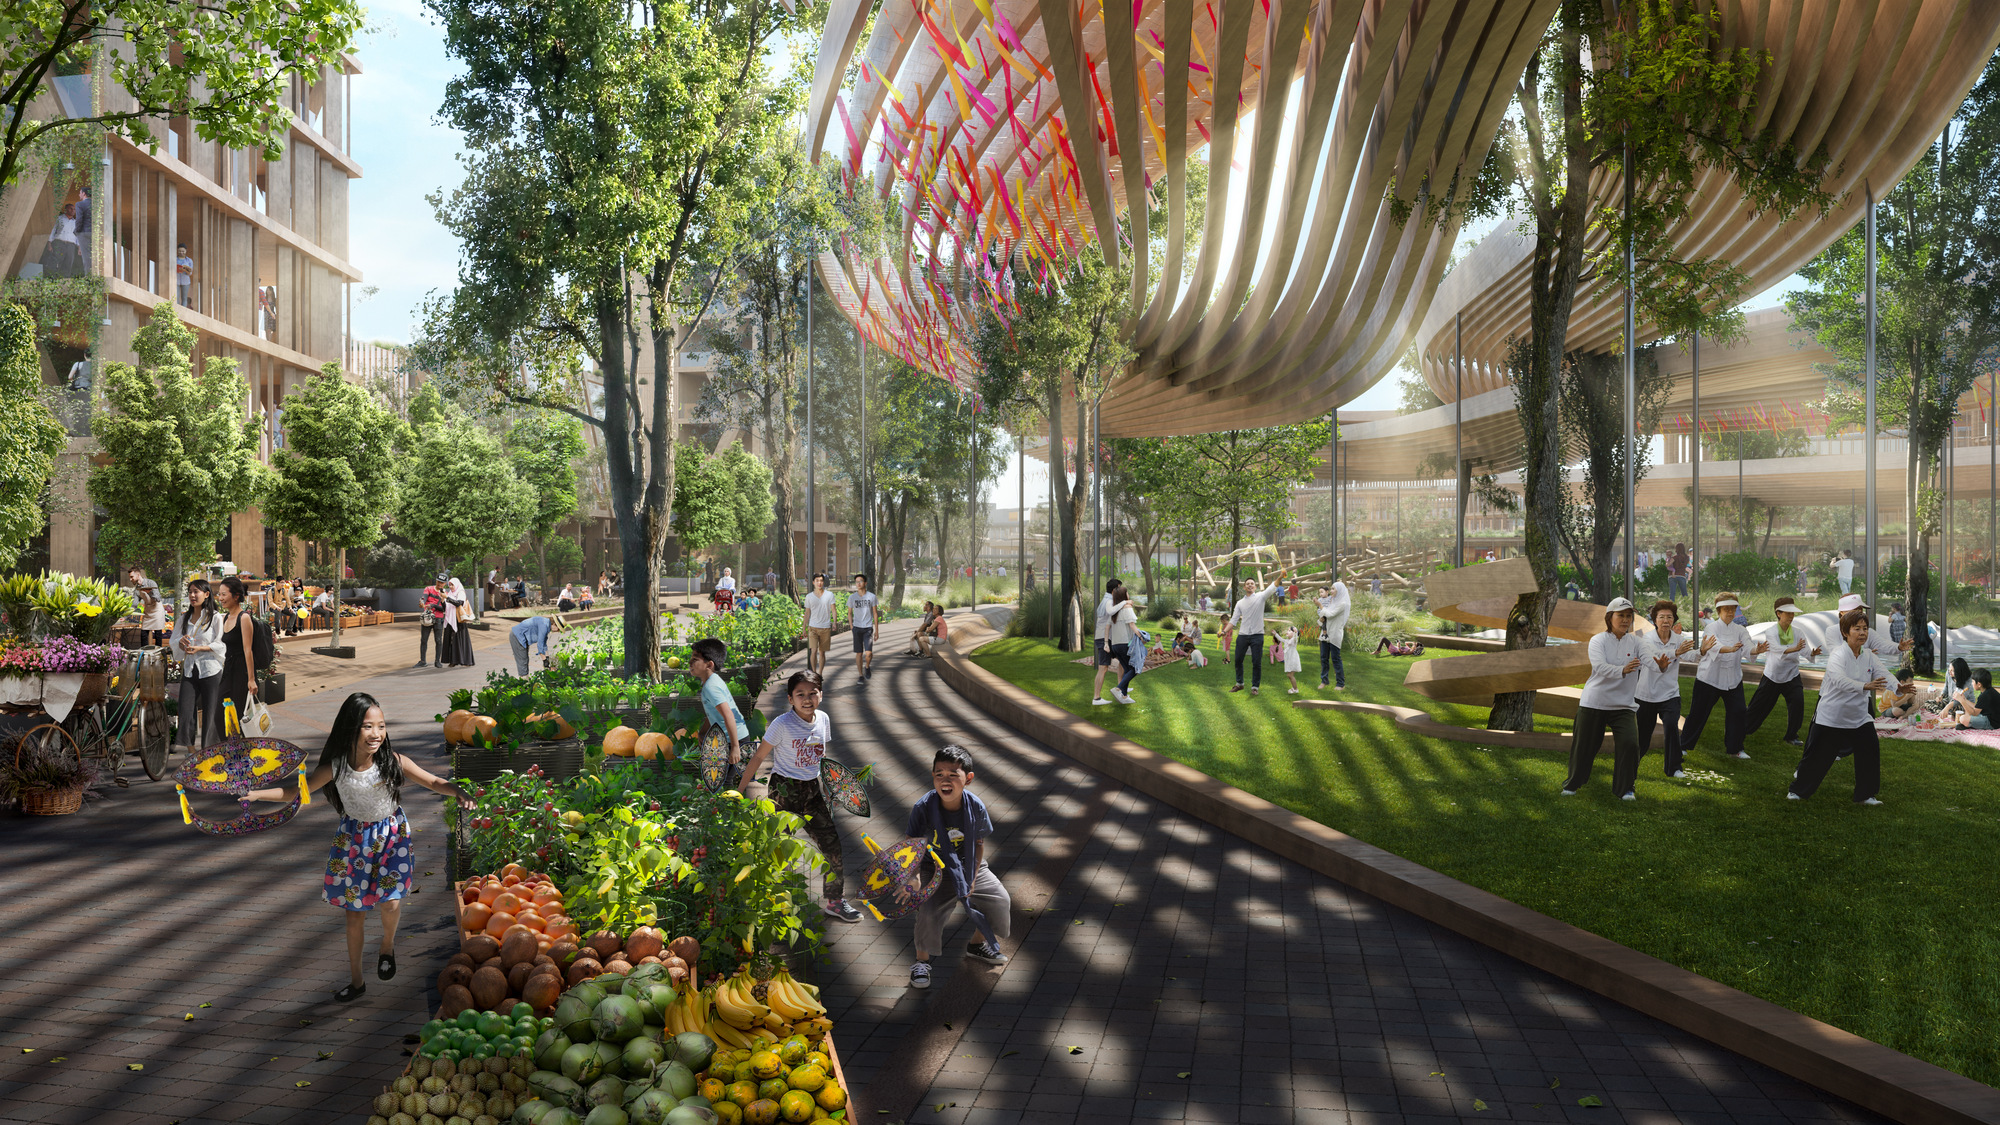 UNStudio Report: Architecture and Urban Design Critical to Helping Build Communities Post-Corona